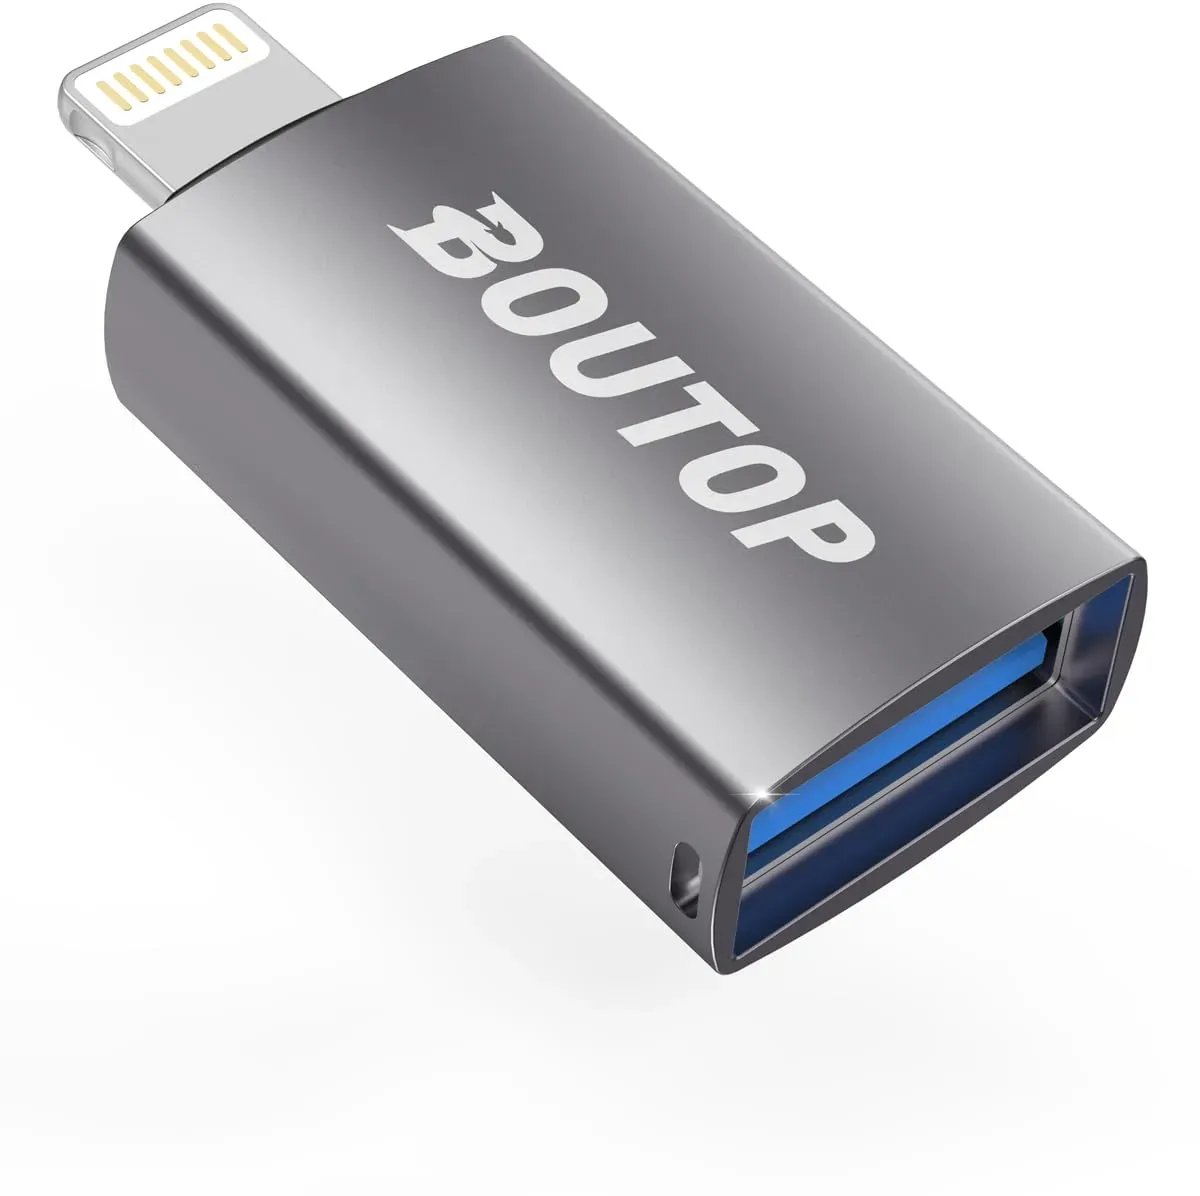 BOUTOP Lightning auf USB 3 Kamera-Adapter für iPhone, iPad, iPod - [Apple MFi Zertifiziert] USB OTG Adapter kompatibel mit Digitalkamera, USB Stick, Kartenleser, Maus, Tastatur usw - 1 Packung [Grau]